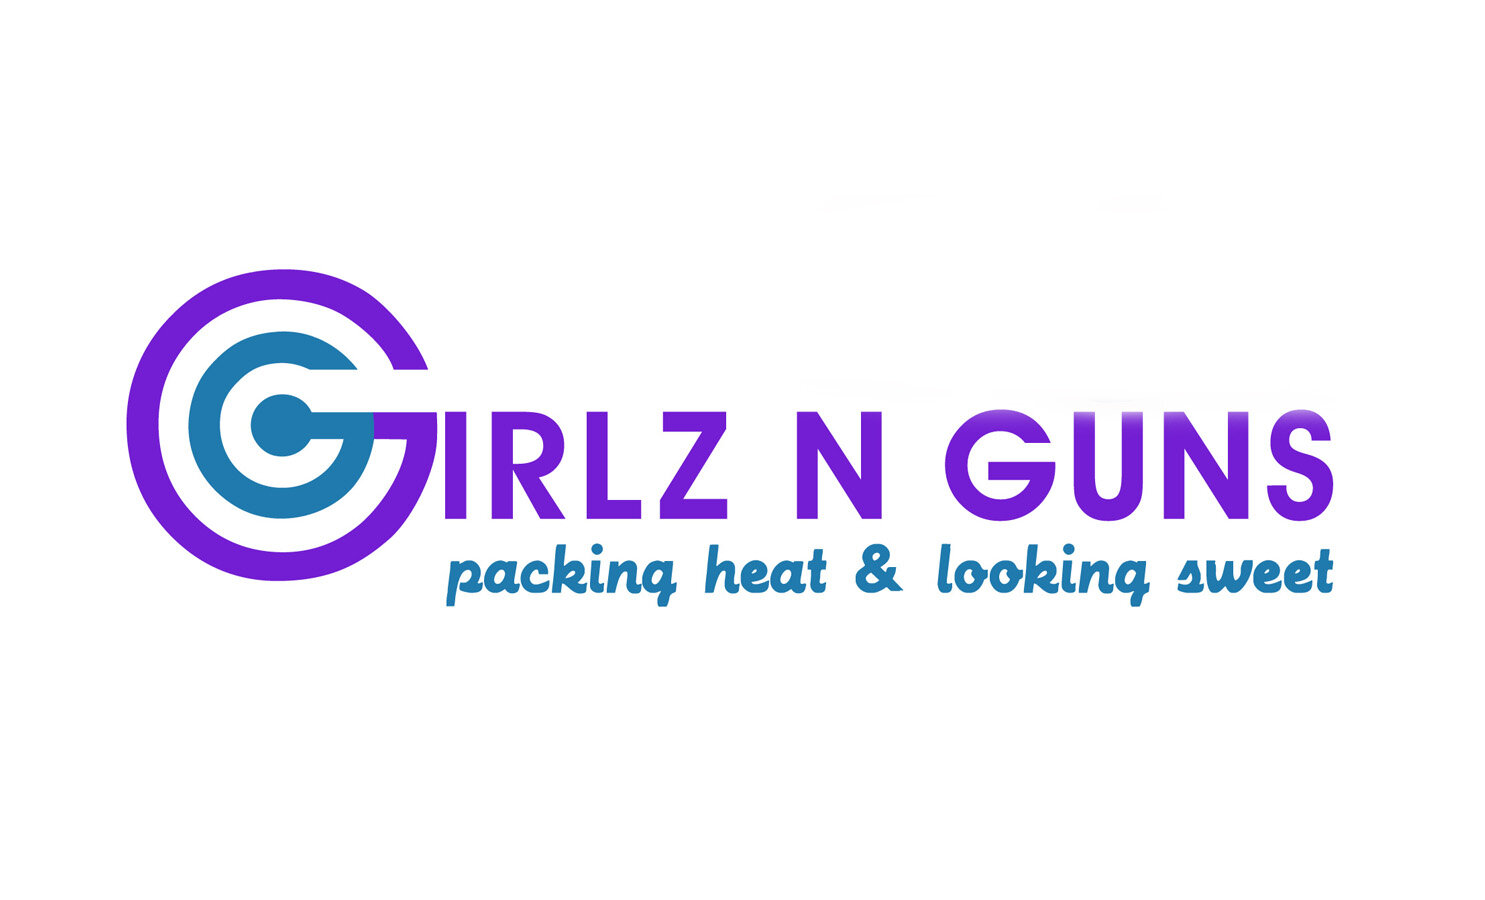 www.girlznguns.com